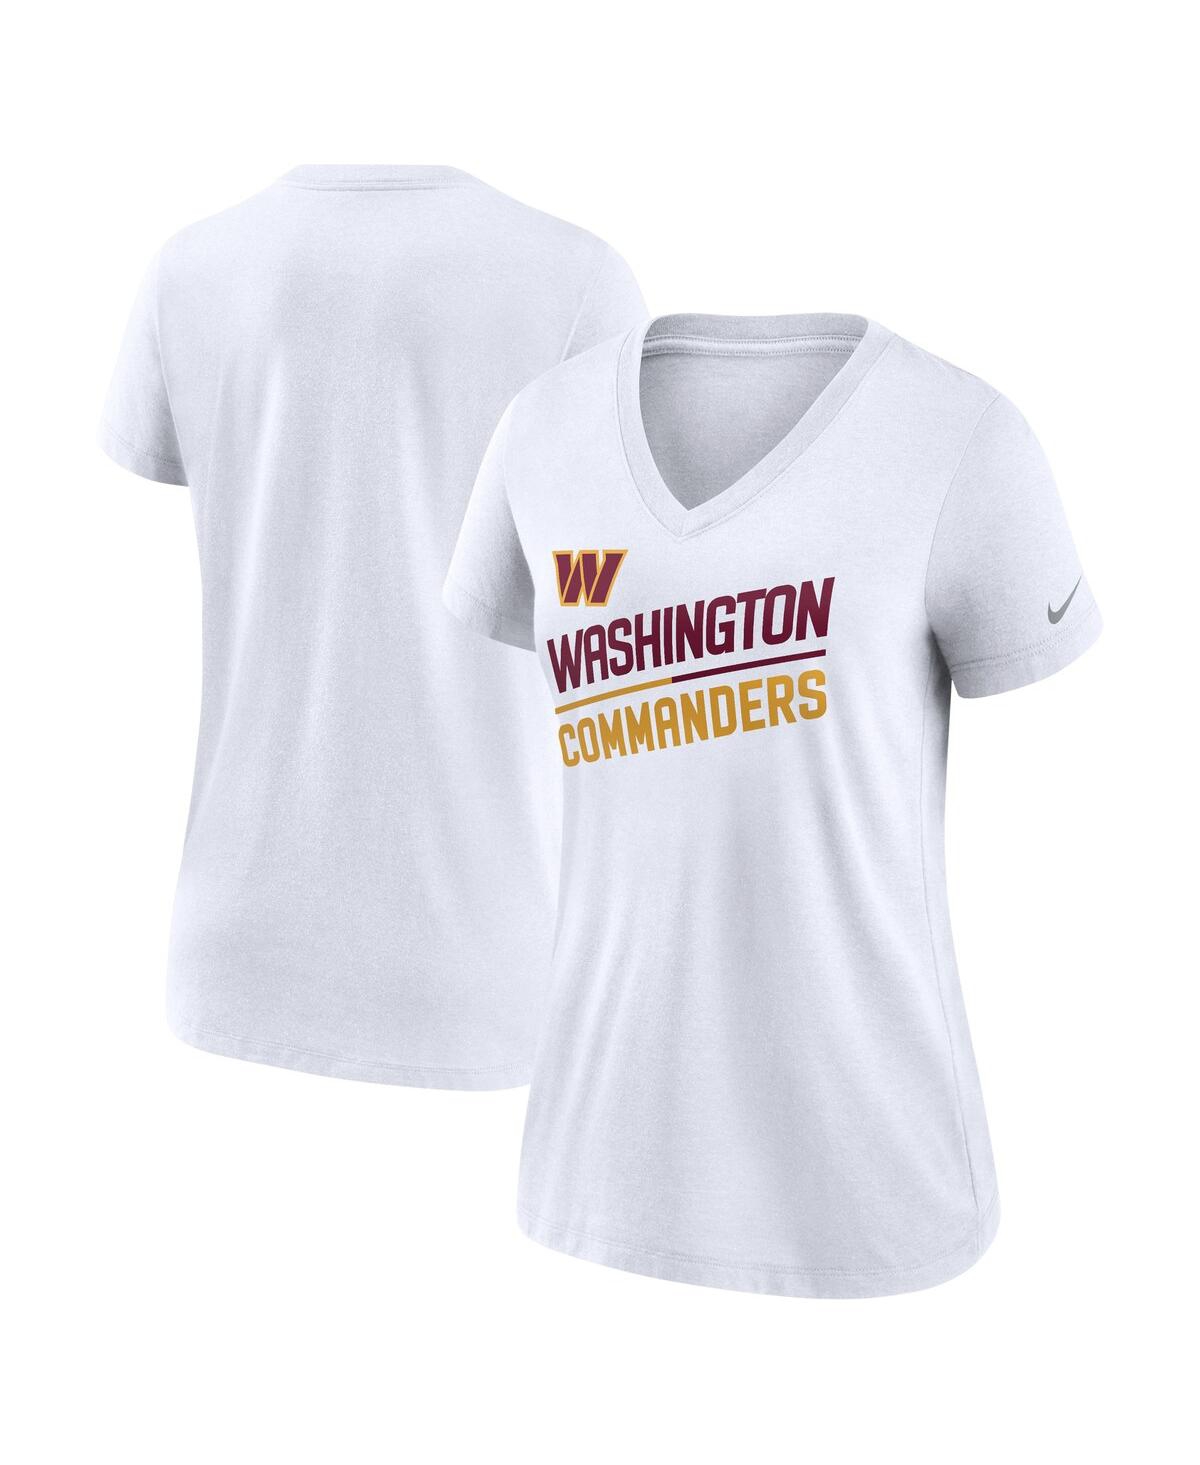 Shop Nike Women's  White Washington Commanders Slant Logo Tri-blend V-neck T-shirt